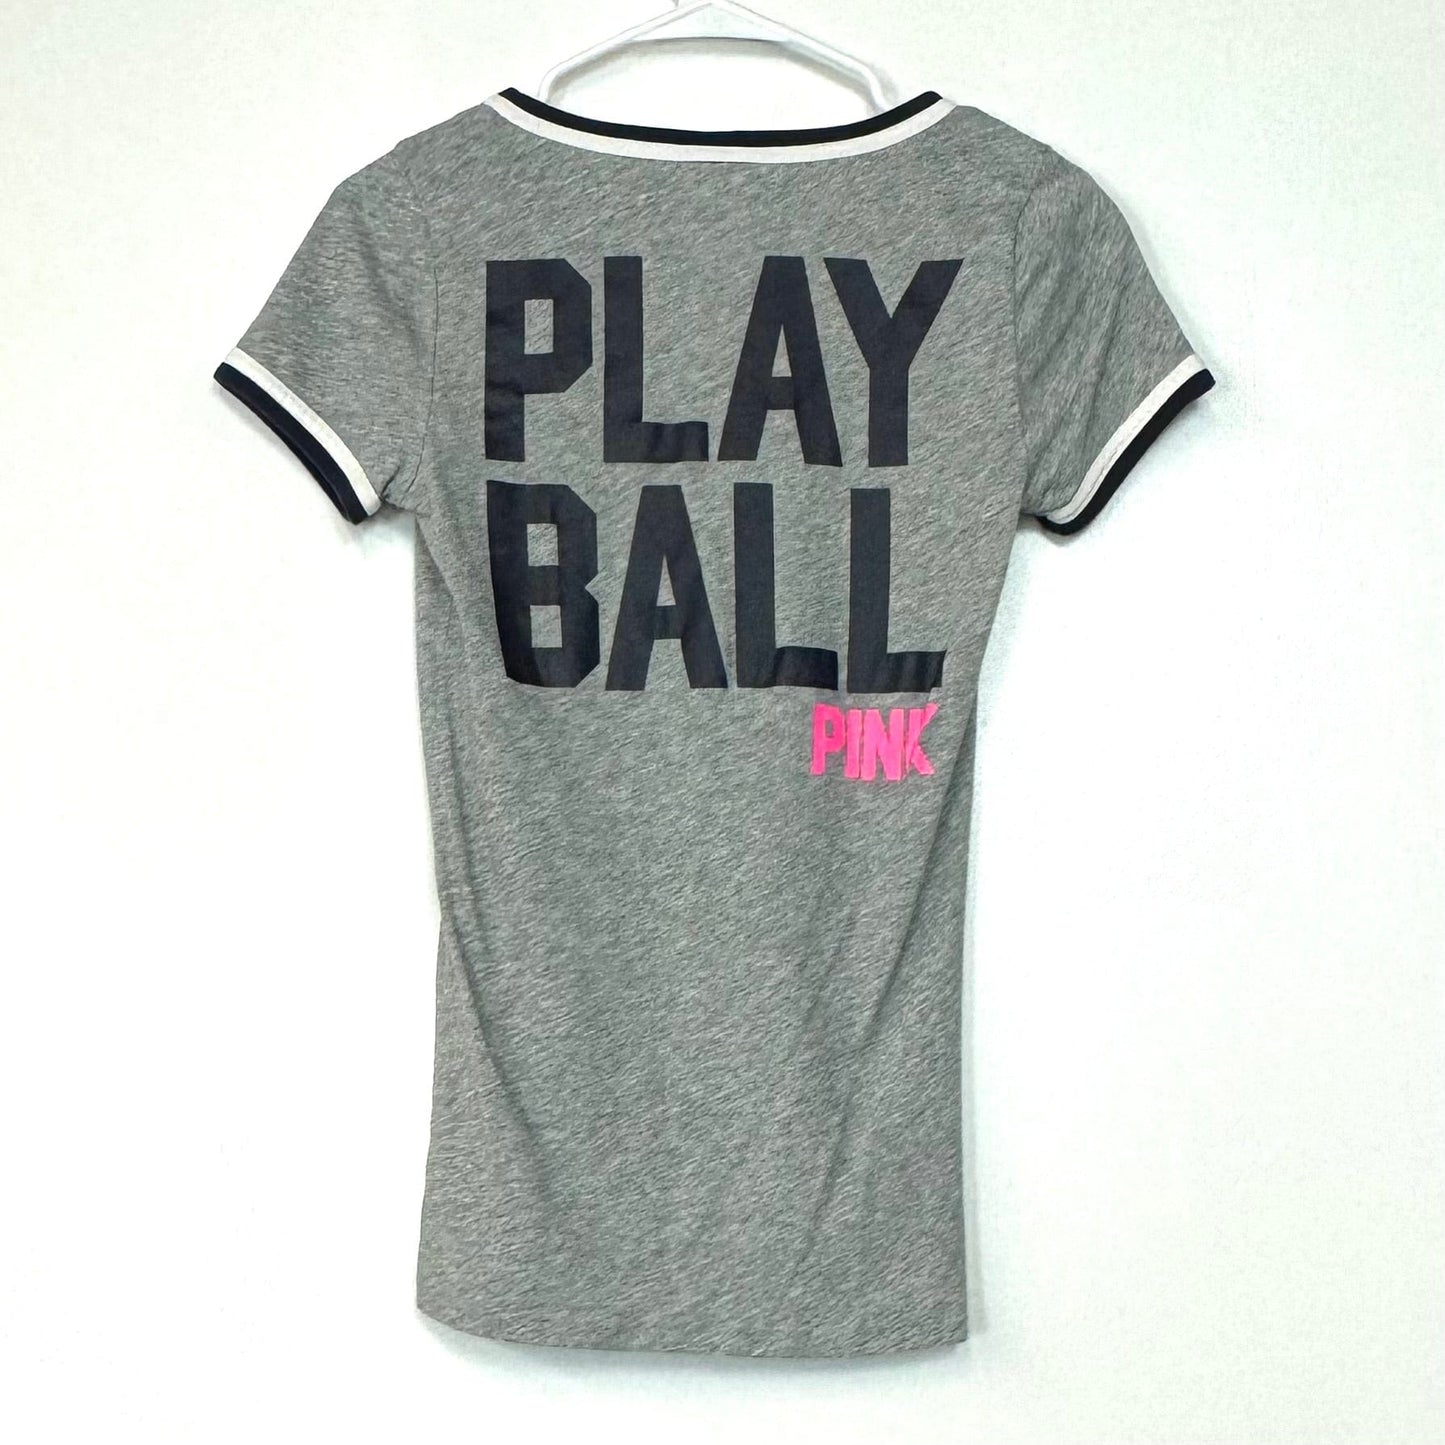 Victoria’s Secret PINK | 5th & Ocean NY Yankees V-Neck T-Shirt | Color: Gray | Size: S